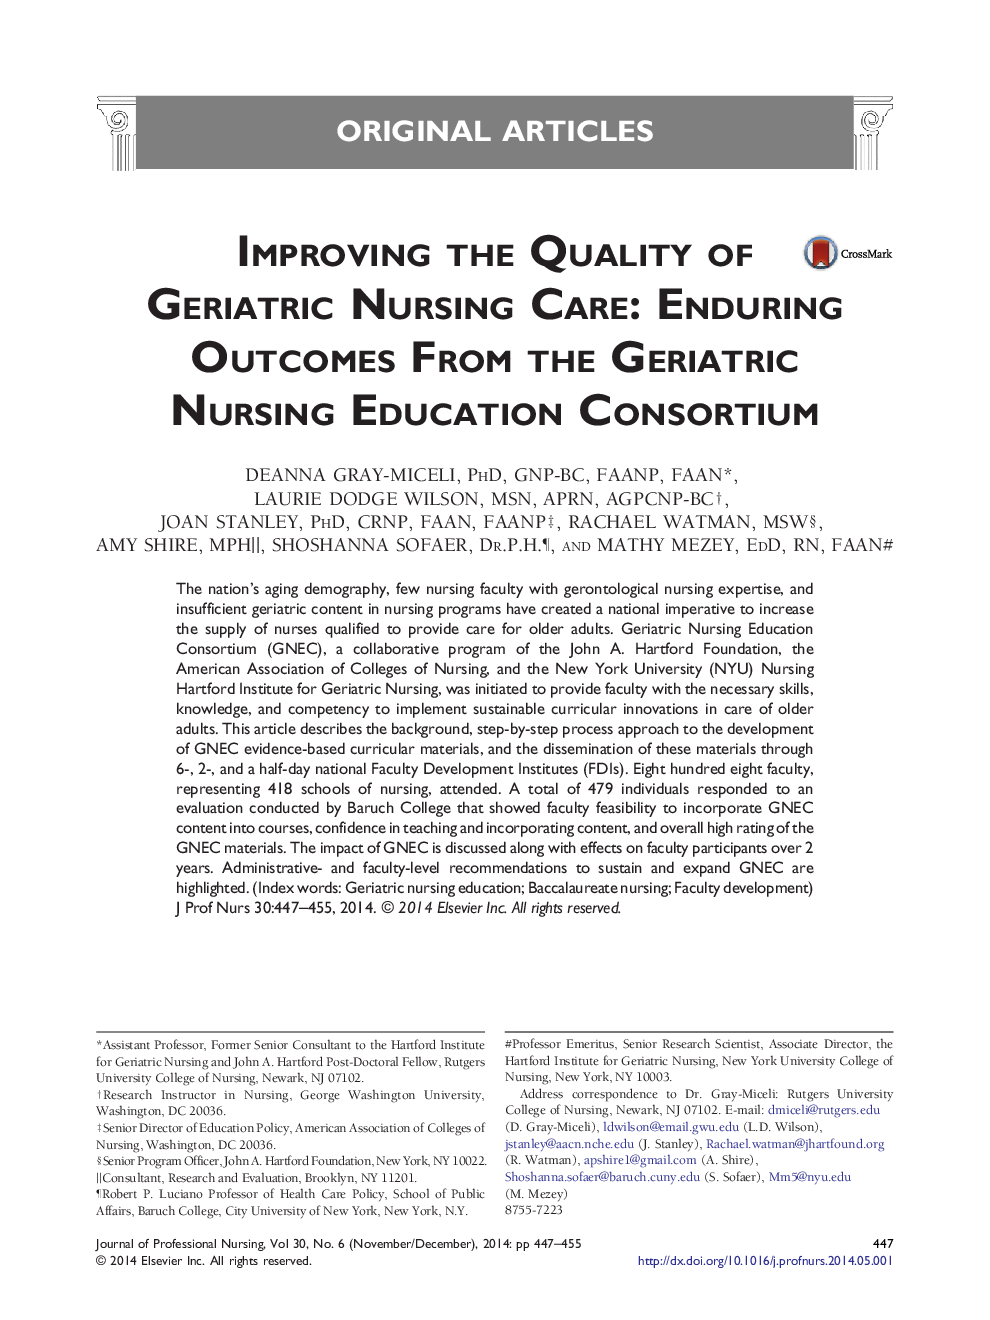 Improving the Quality of Geriatric Nursing Care: Enduring Outcomes From the Geriatric Nursing Education Consortium